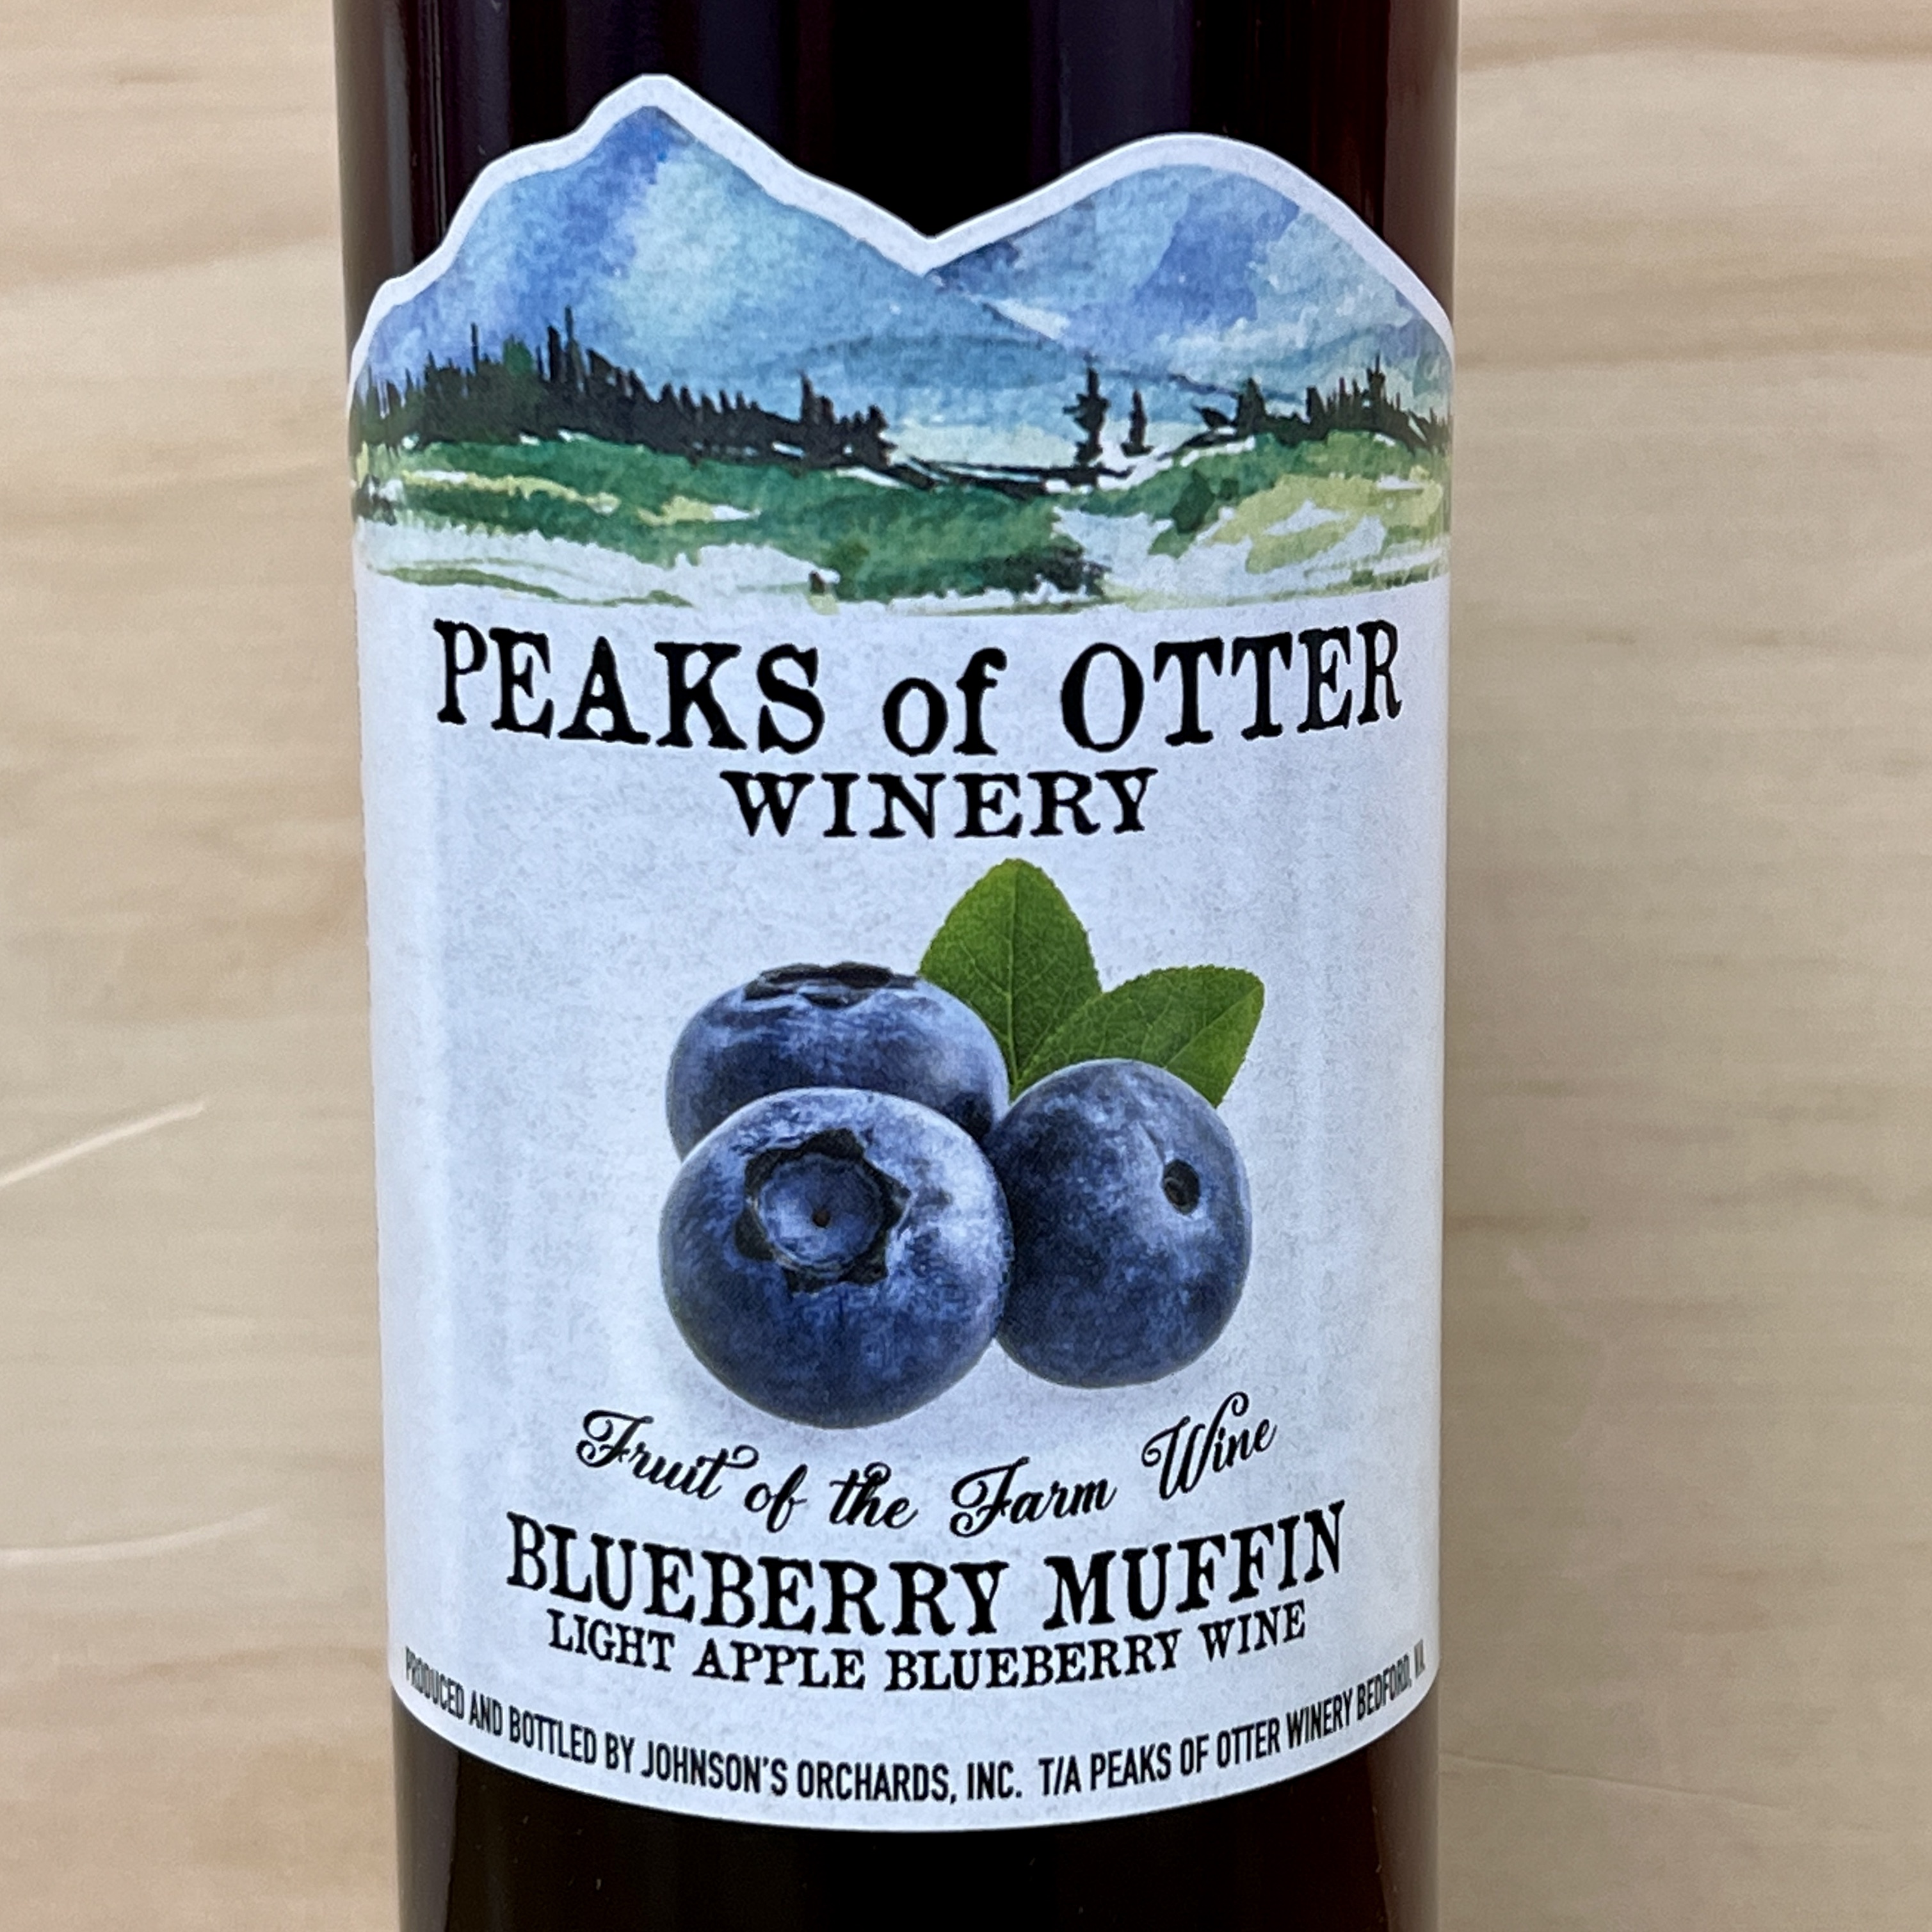 Peaks of Otter Blueberry Muffin Apple Blueberry wine 500ml